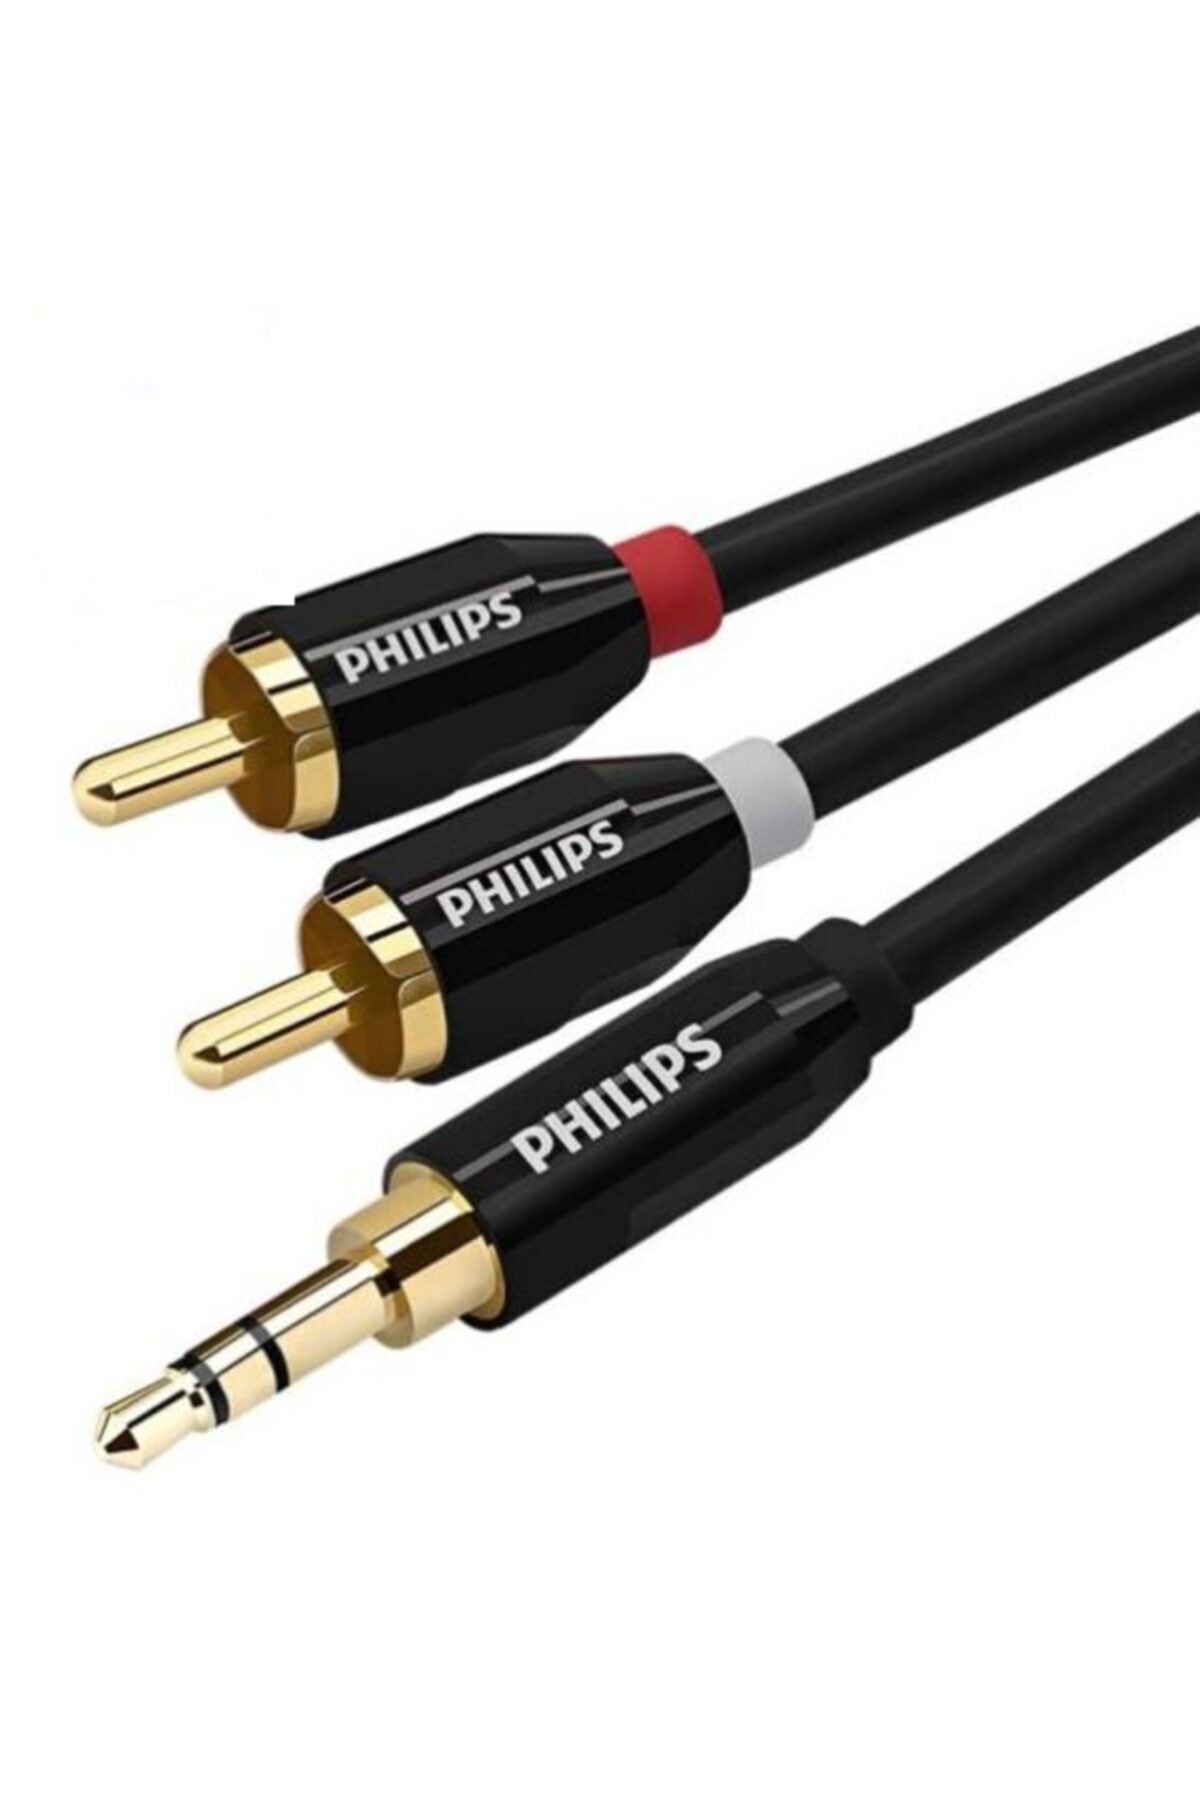 Philips Swr2121c Yüksek Kalite Rca To Aux Kablo To 2x Rca 2 Metre Kablo Uzunluğu  3.5mm